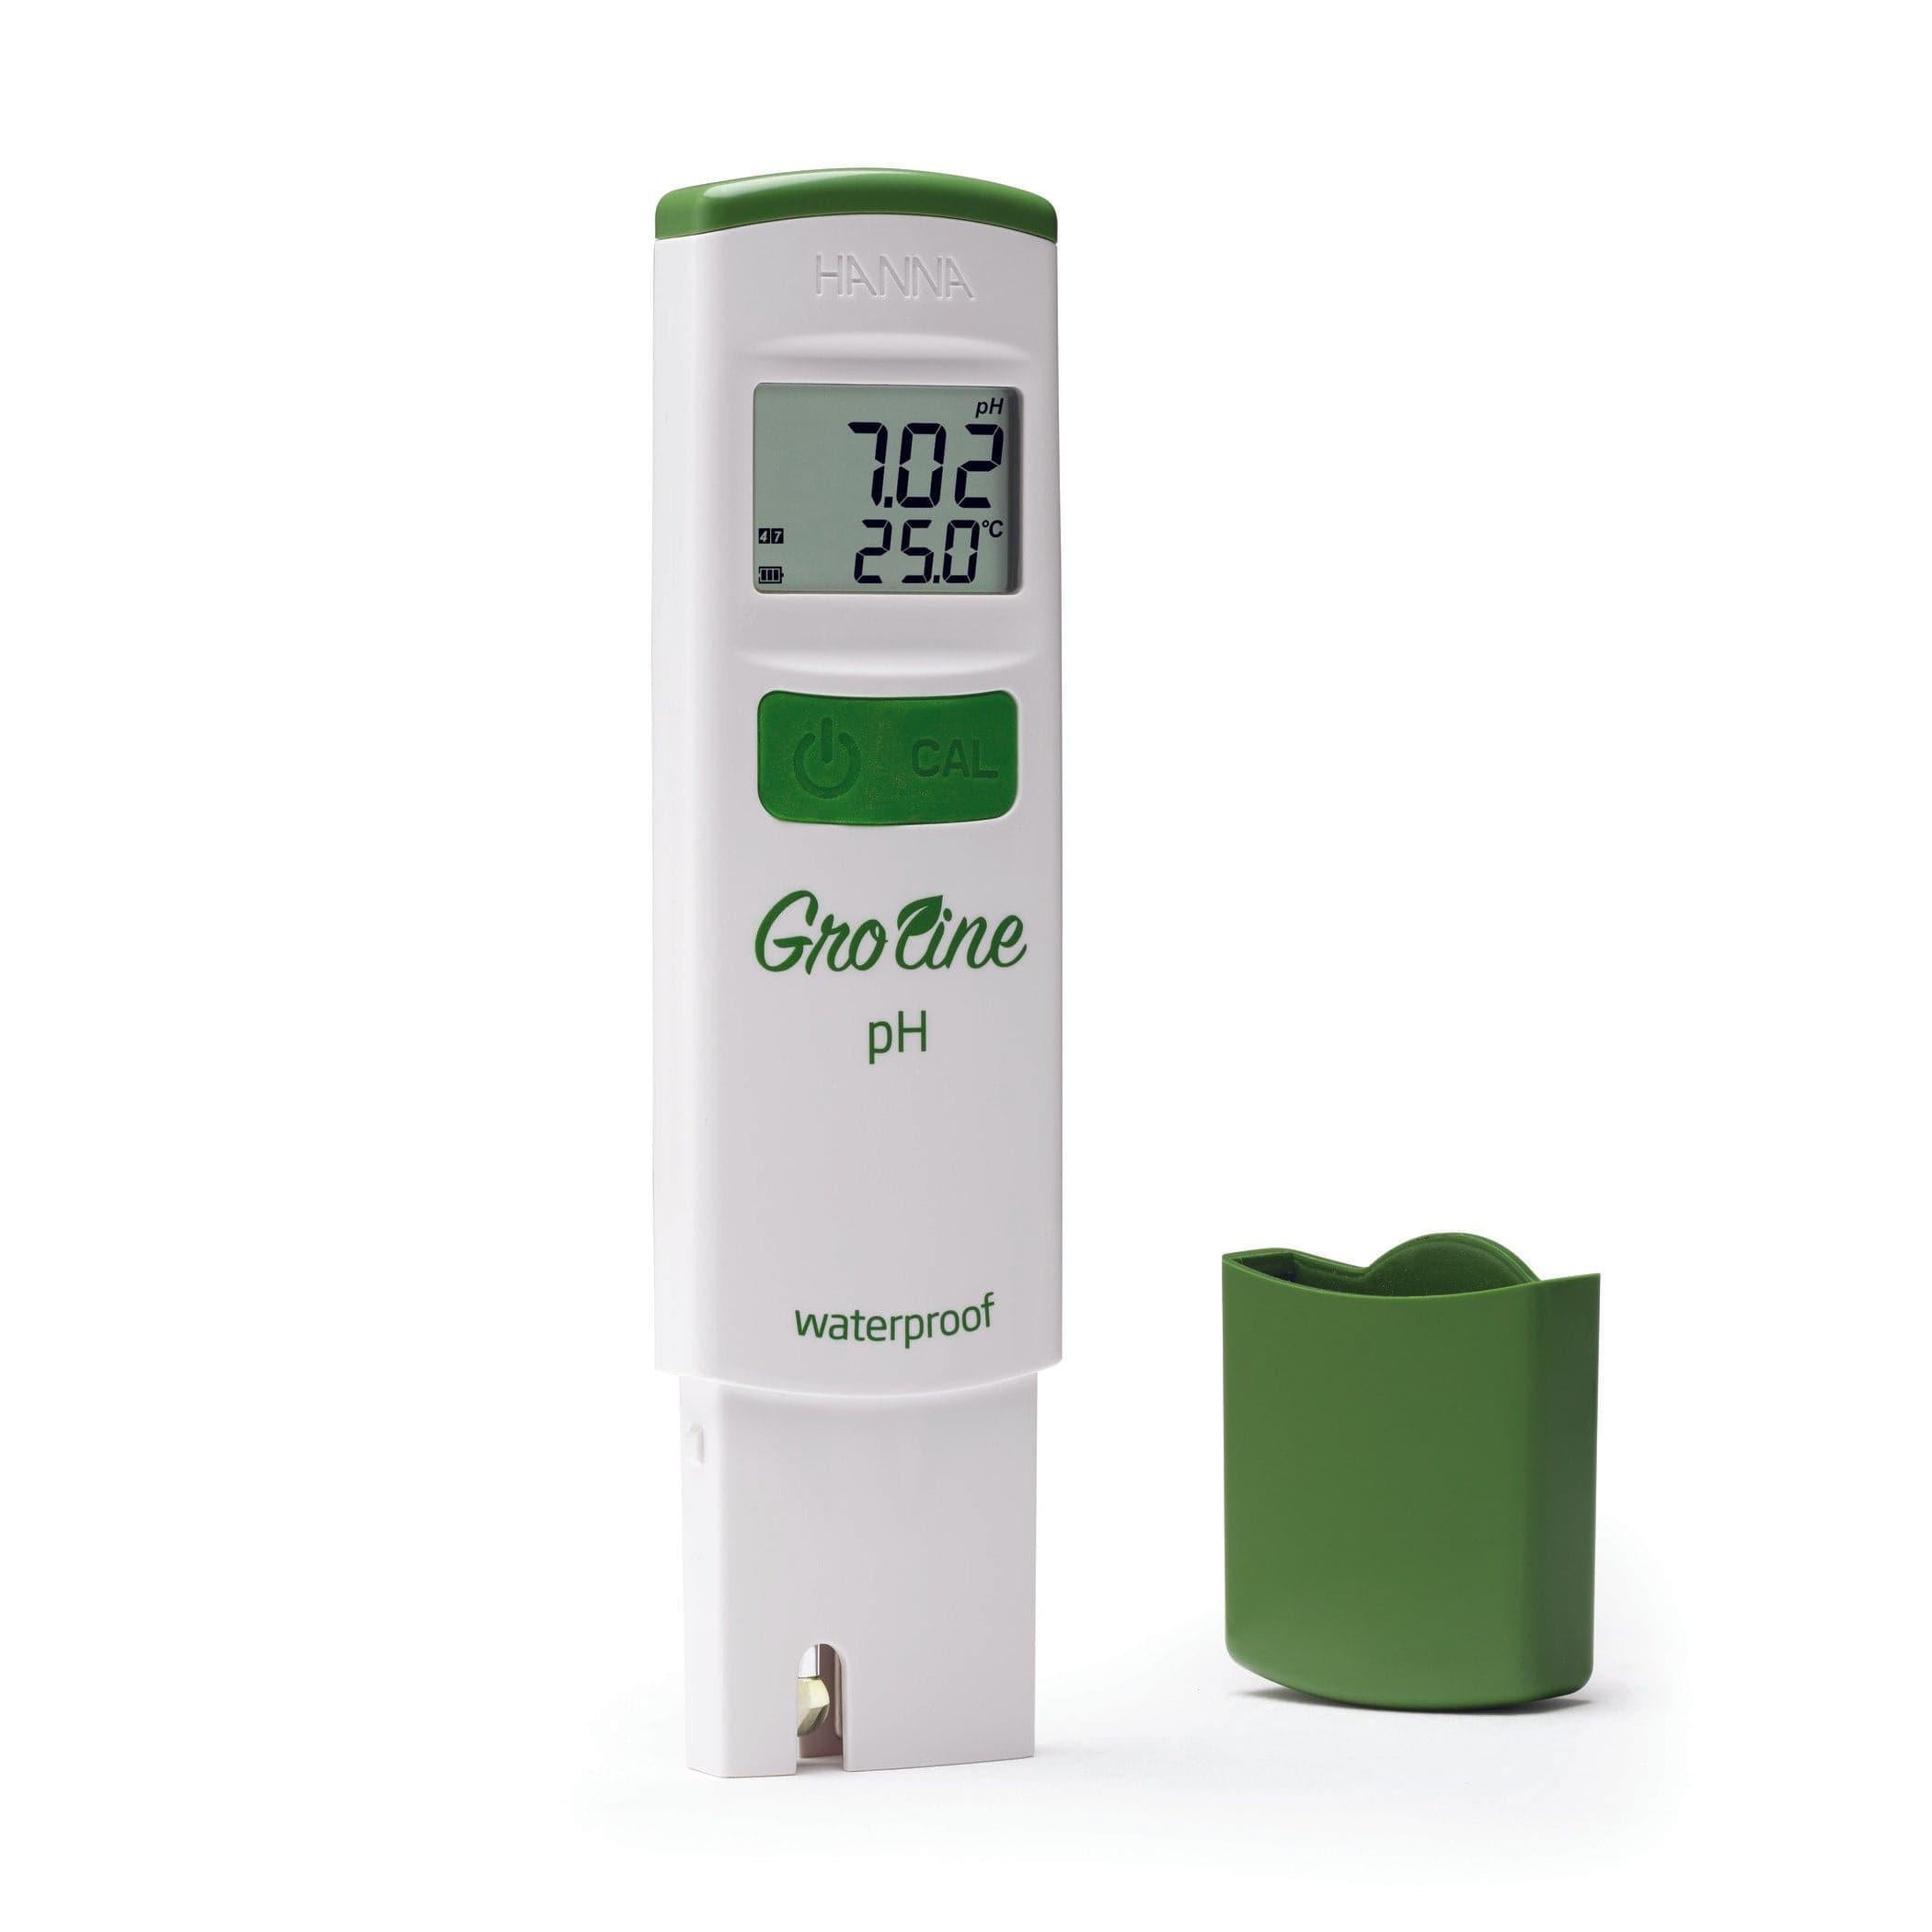 Nutrient Mangement Hanna Instruments GroLine Waterproof pH & Temperature Tester